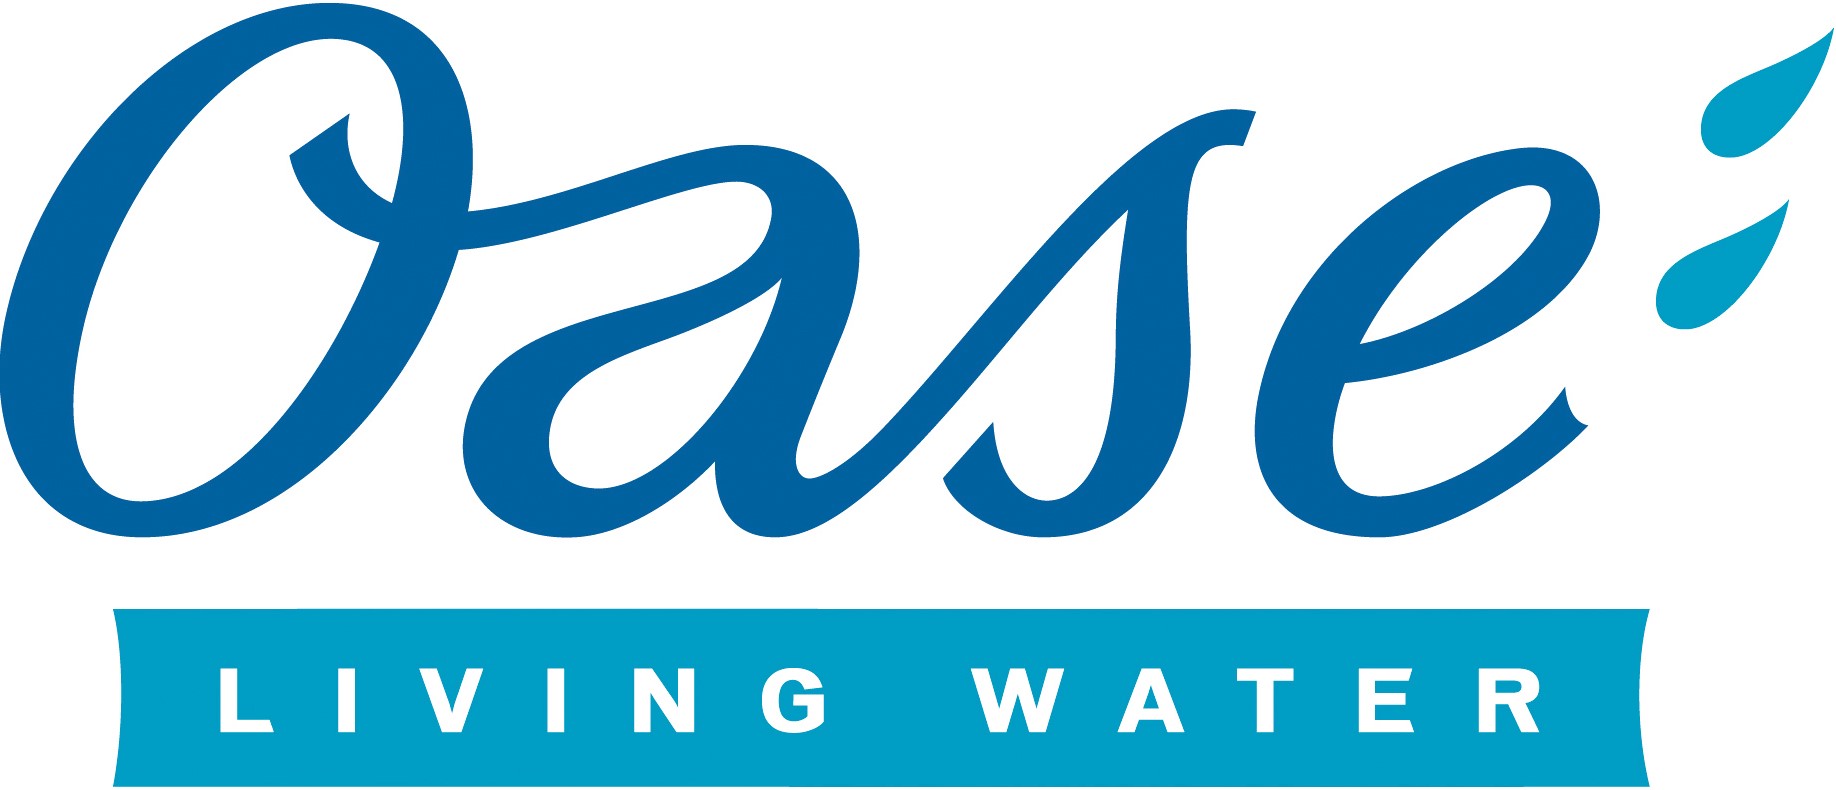 oase logo 2